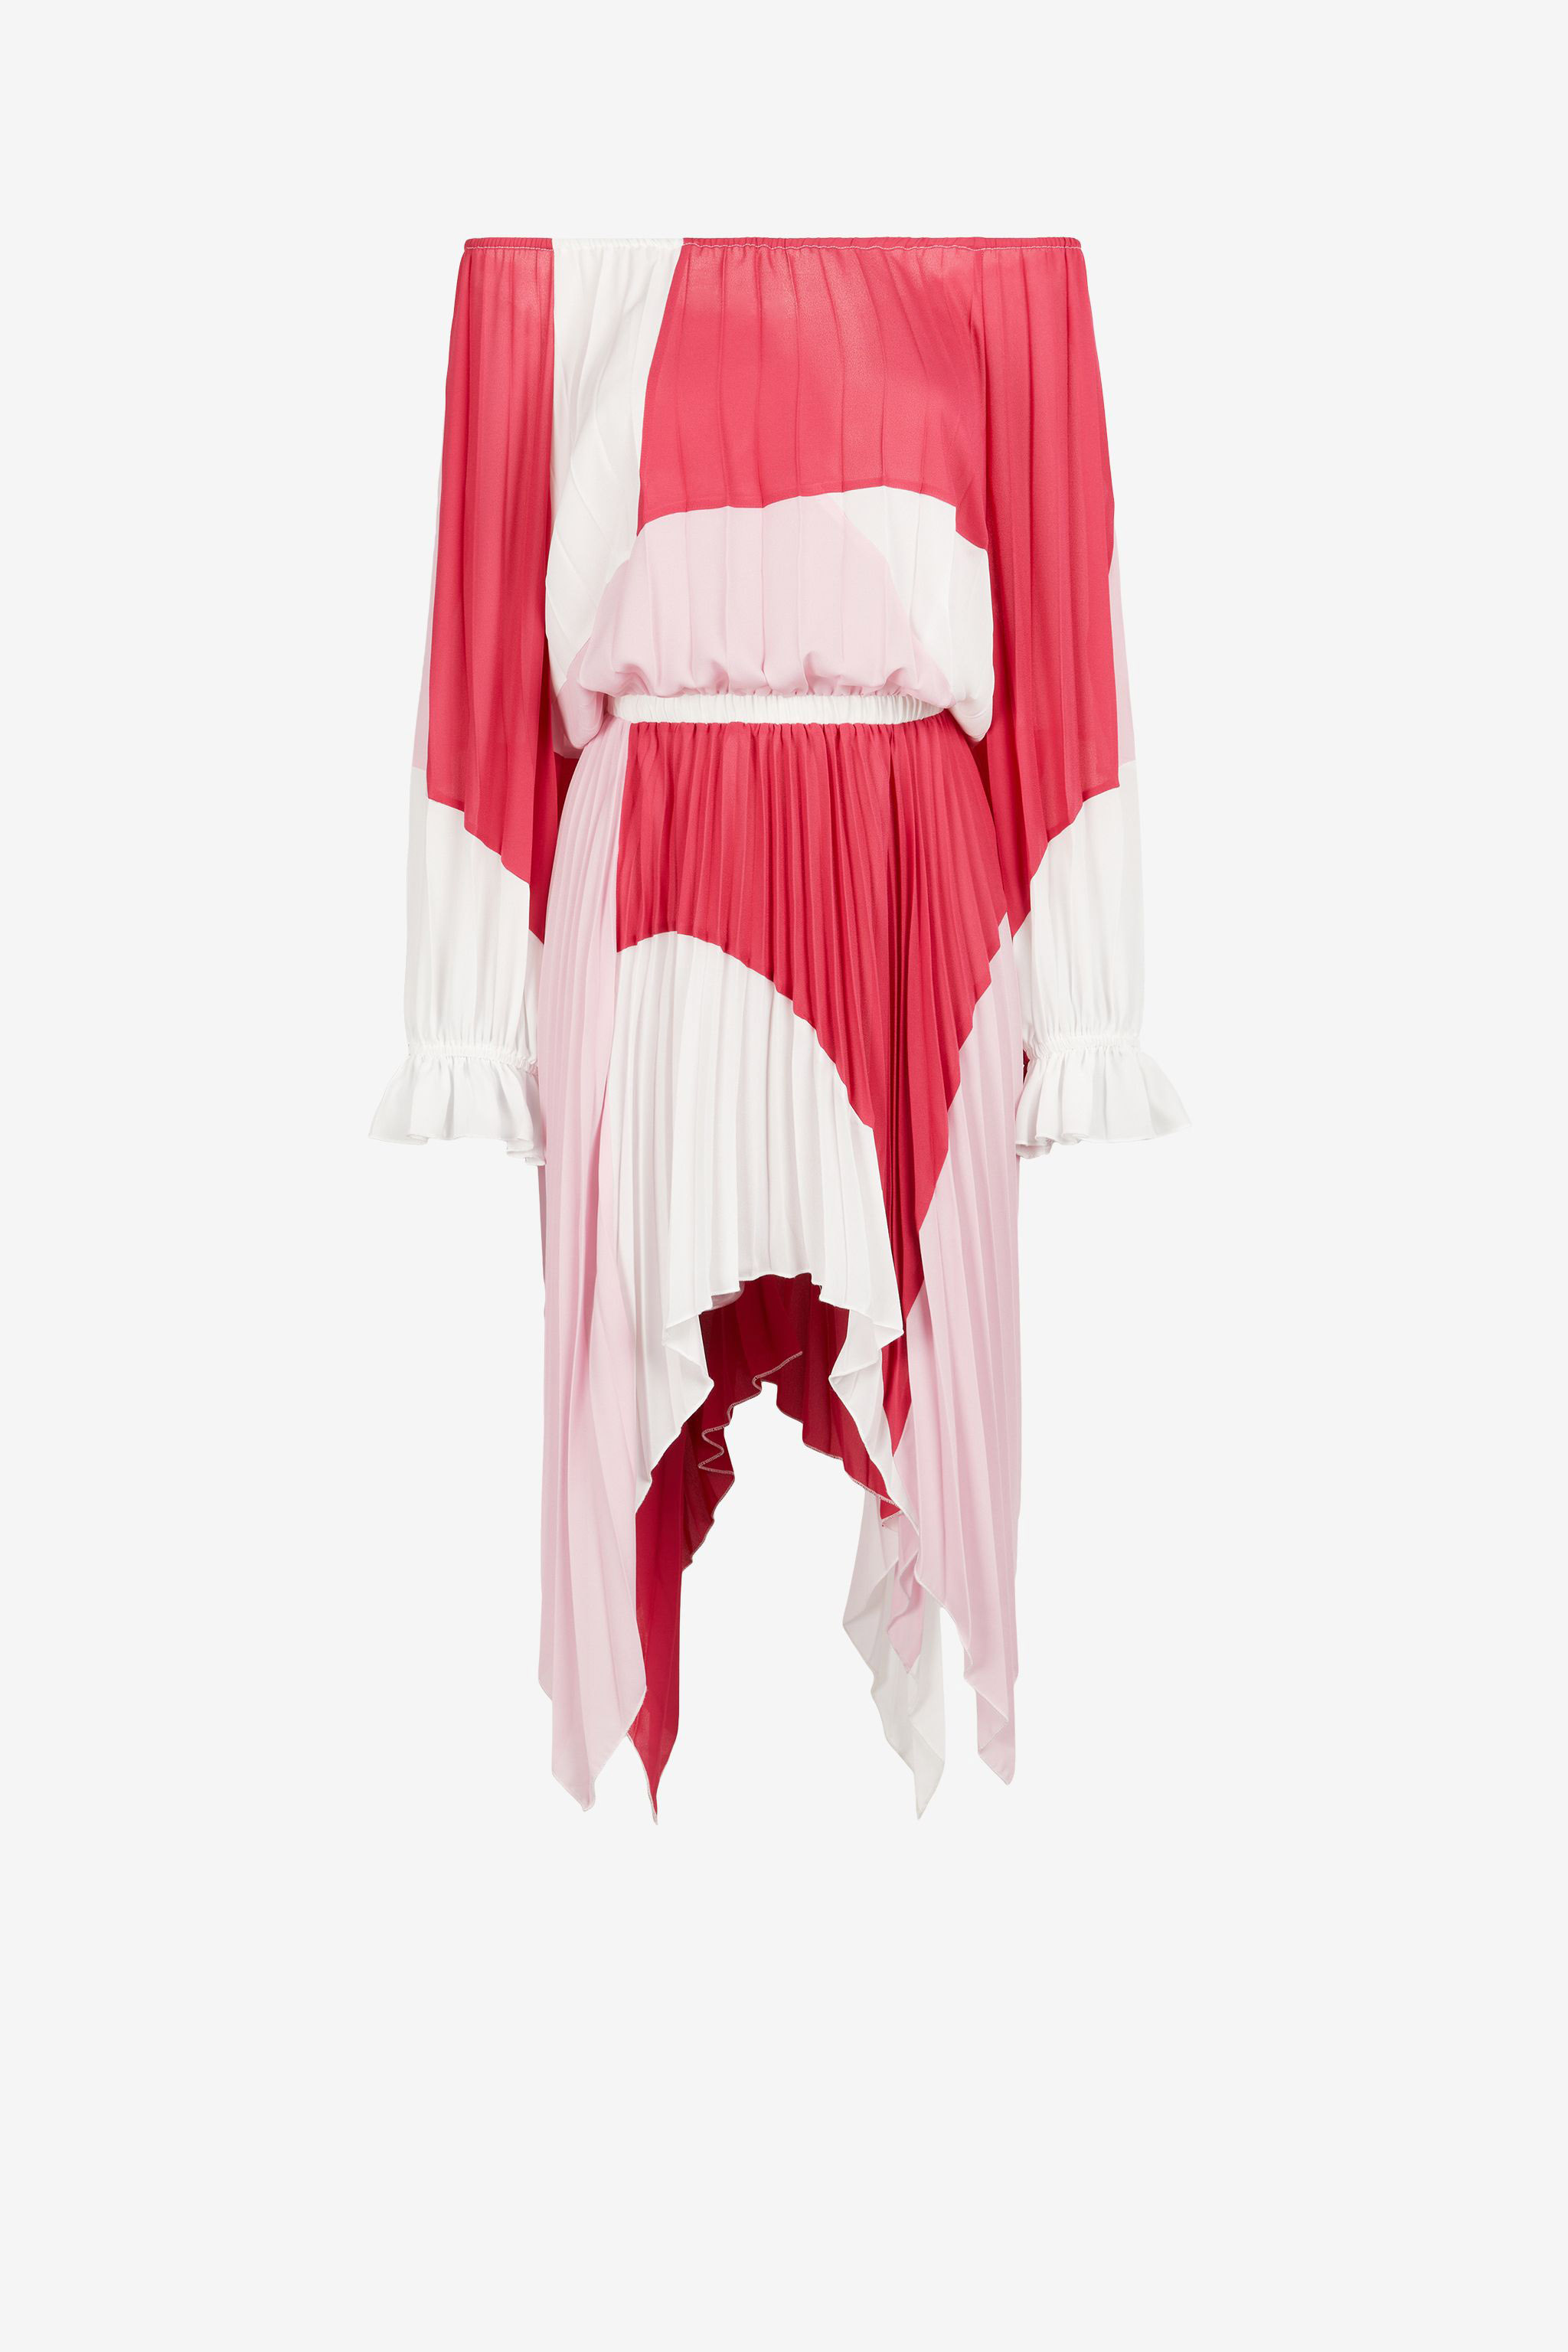 Just Cavalli Abstract-Print Pleated Dress | 961-961 | Last chance ...